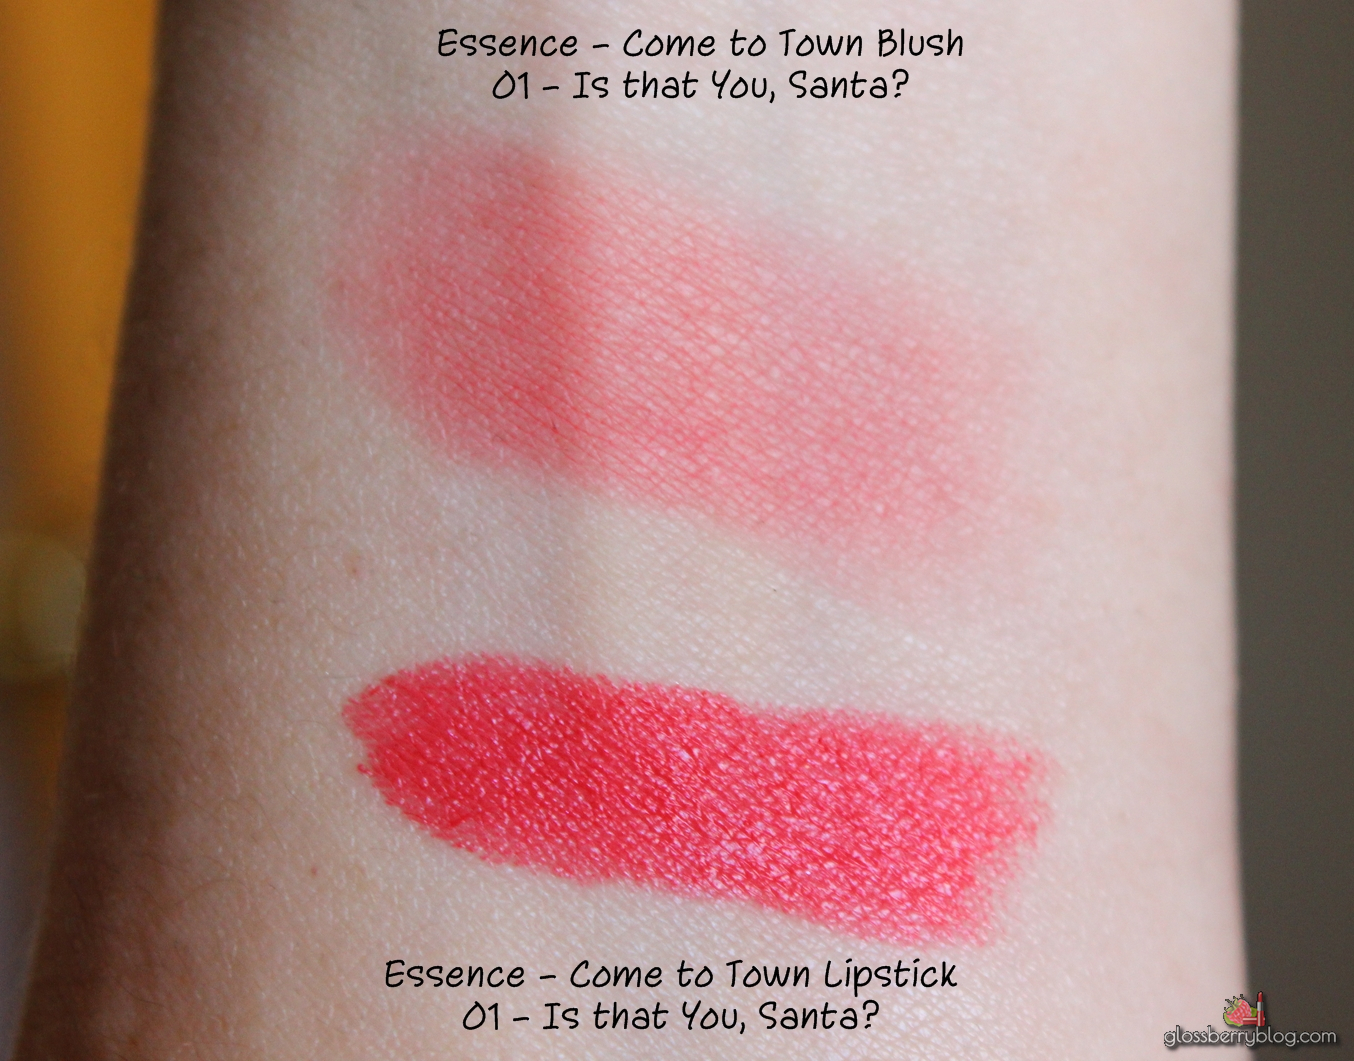  Essence - Come to Town Collection is that you santa lipstick blush אסנס קולקציה סילבסטר מהדורה מוגבלת סקירה סומק קרמי שפתון גלוסברי בלוג איפור וטיפוח